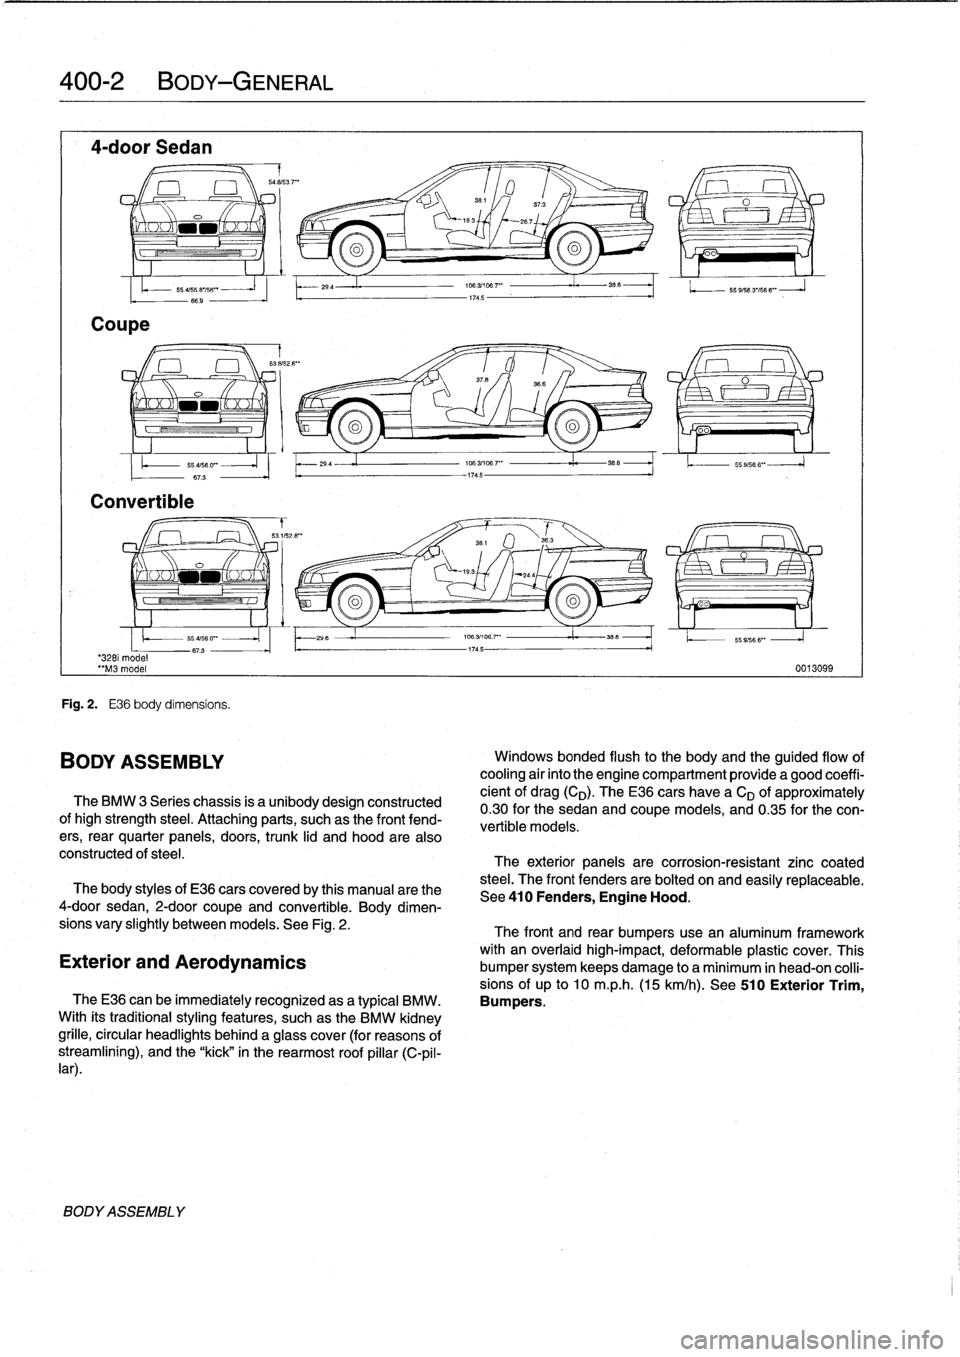 BMW 323i 1997 E36 Workshop Manual 
400-2
BODY-GENERAL

4-door
Sedan

Coupe

-
saas3
.7""

351
/

	

37
.3
O

	

I
x
`-193

	

267

o
oa

3281
model
"M3
model

Convertible

BODYASSEMBLY

55
ass
.e
iss
""
-
66
.9
-

Fig
.
2
.

	

E36
b